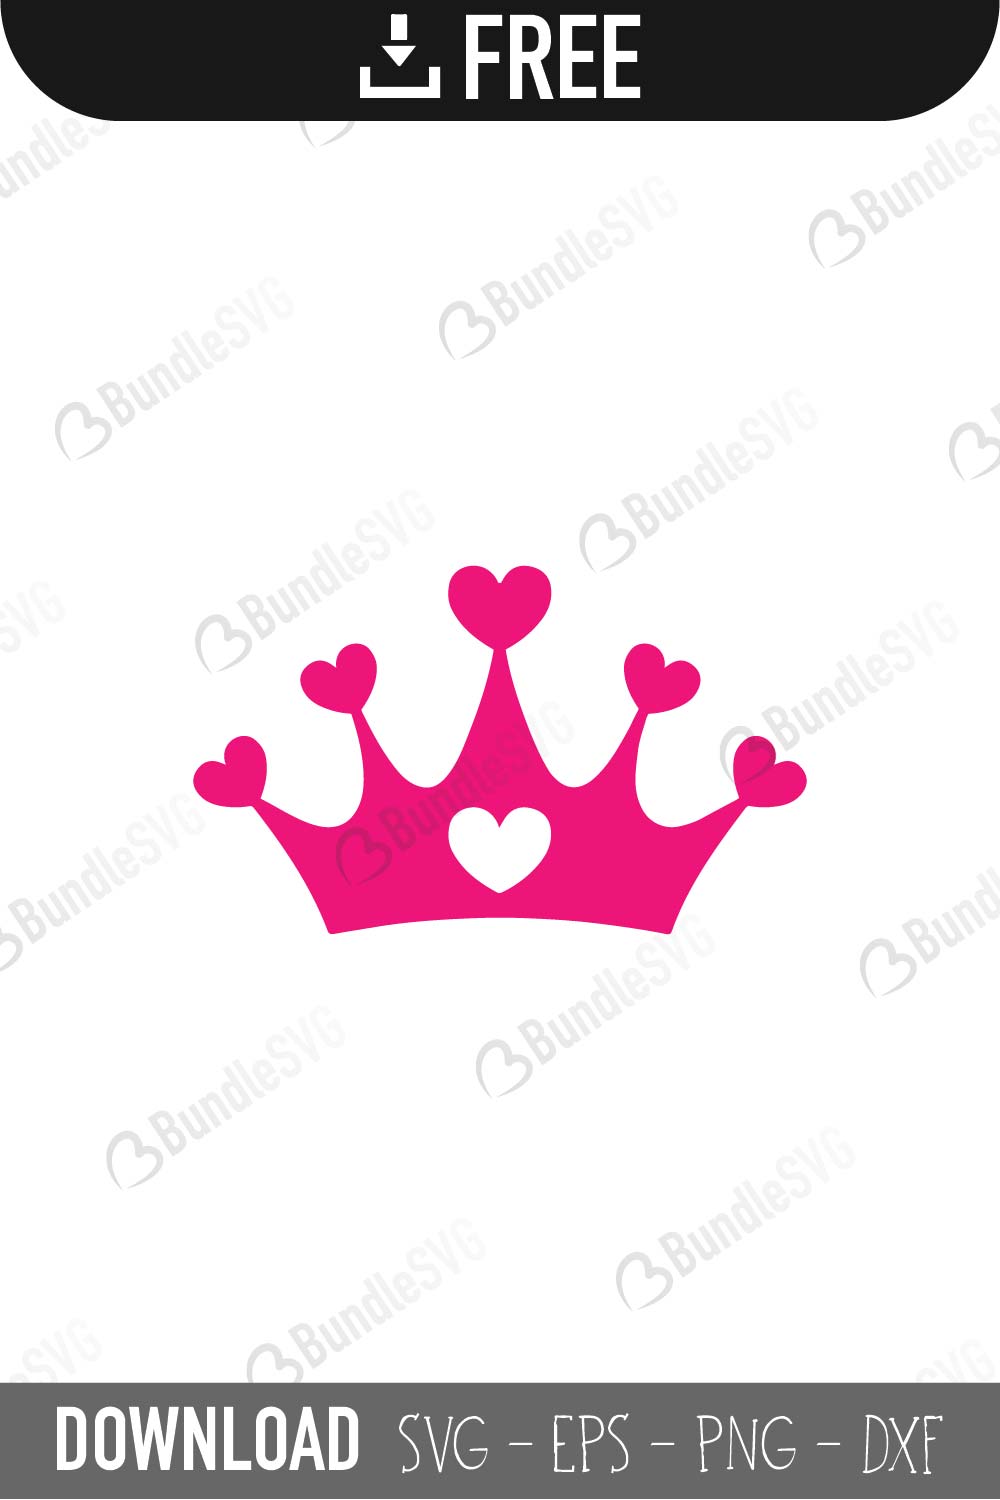 Download Free Princess Crown Svg Cut Files Bundlesvg